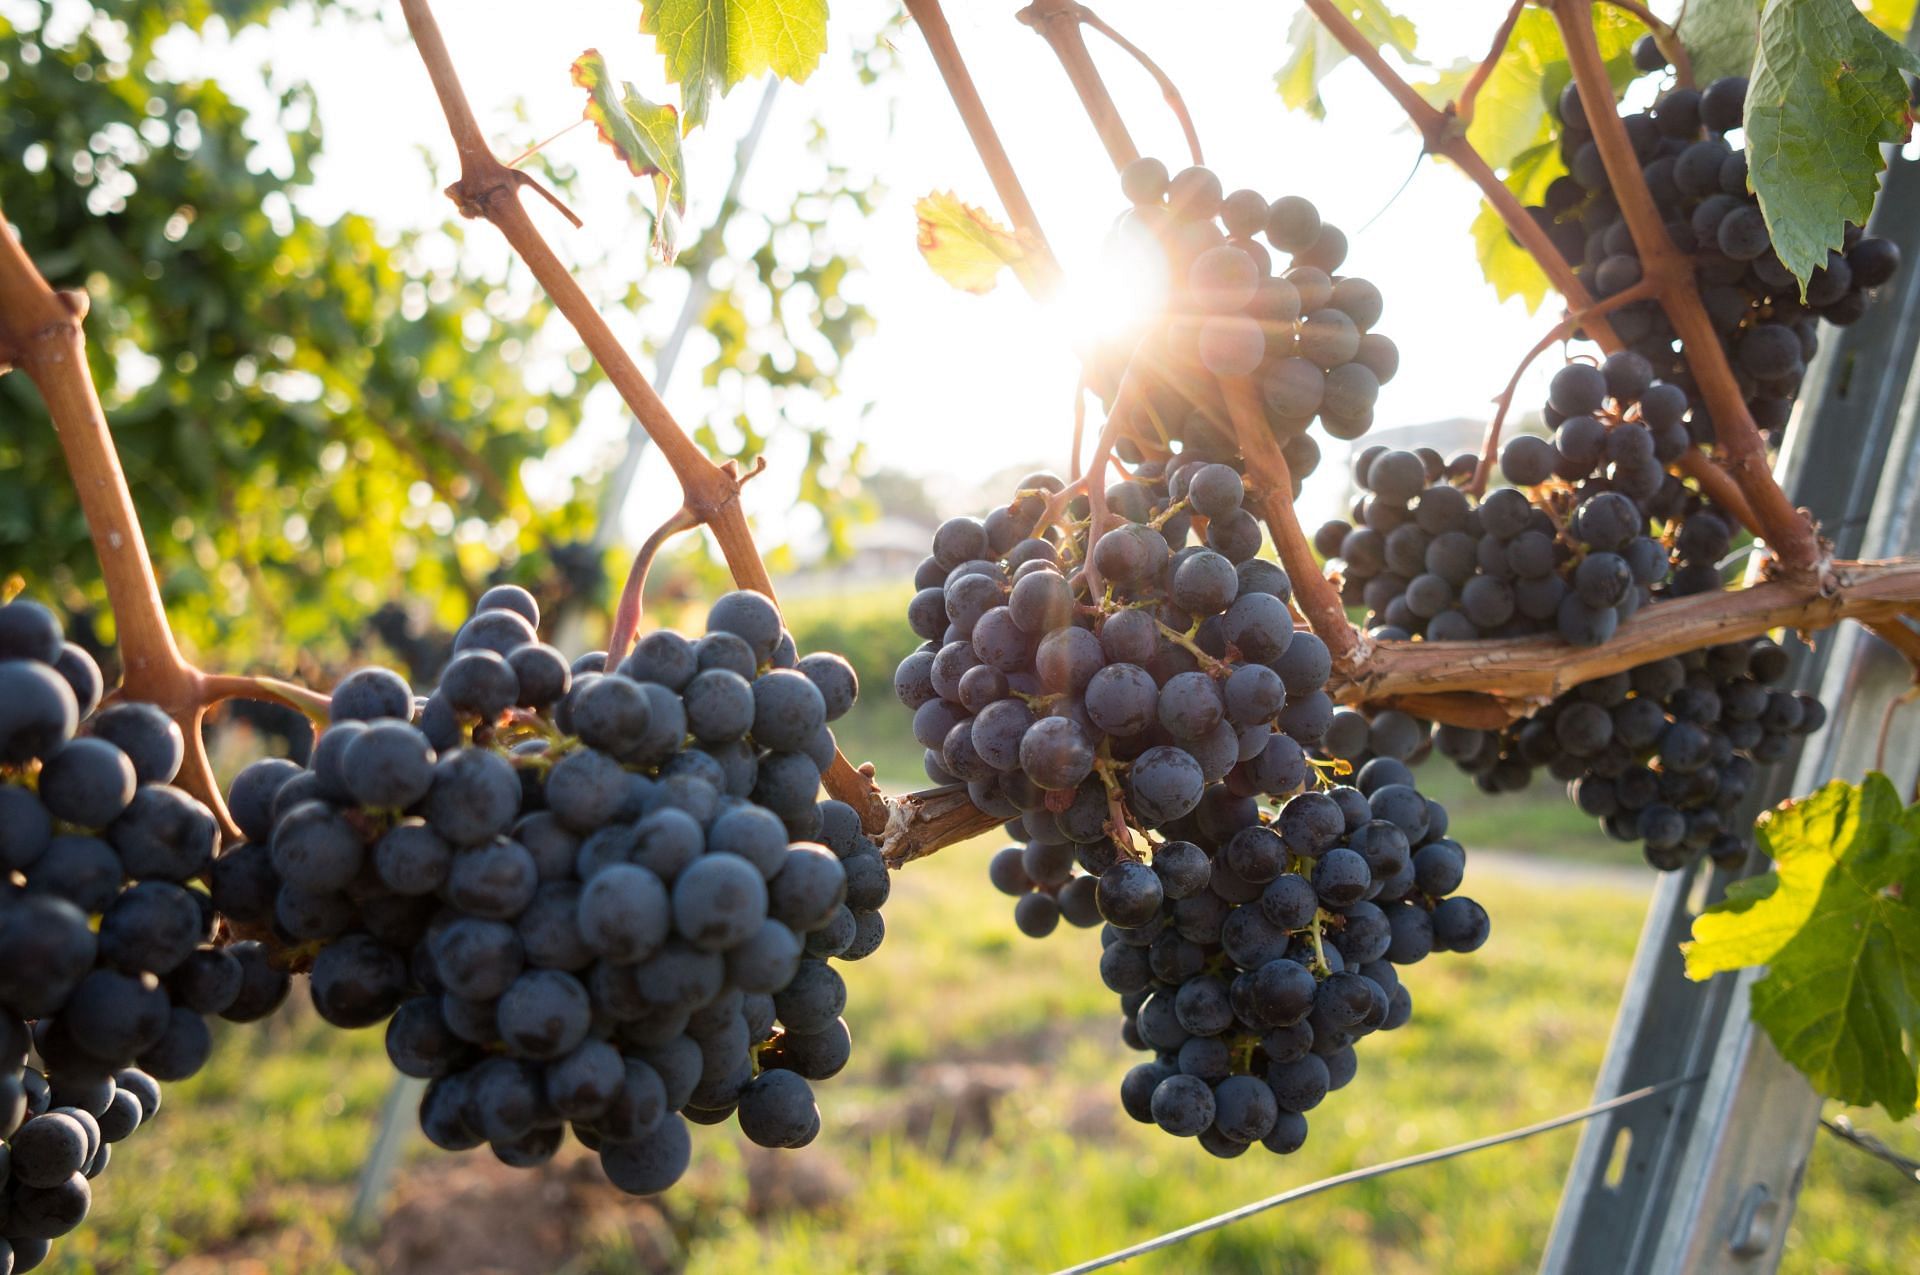 Here are some of thr benefits of grapes! (Image via unsplash/David Kohler)